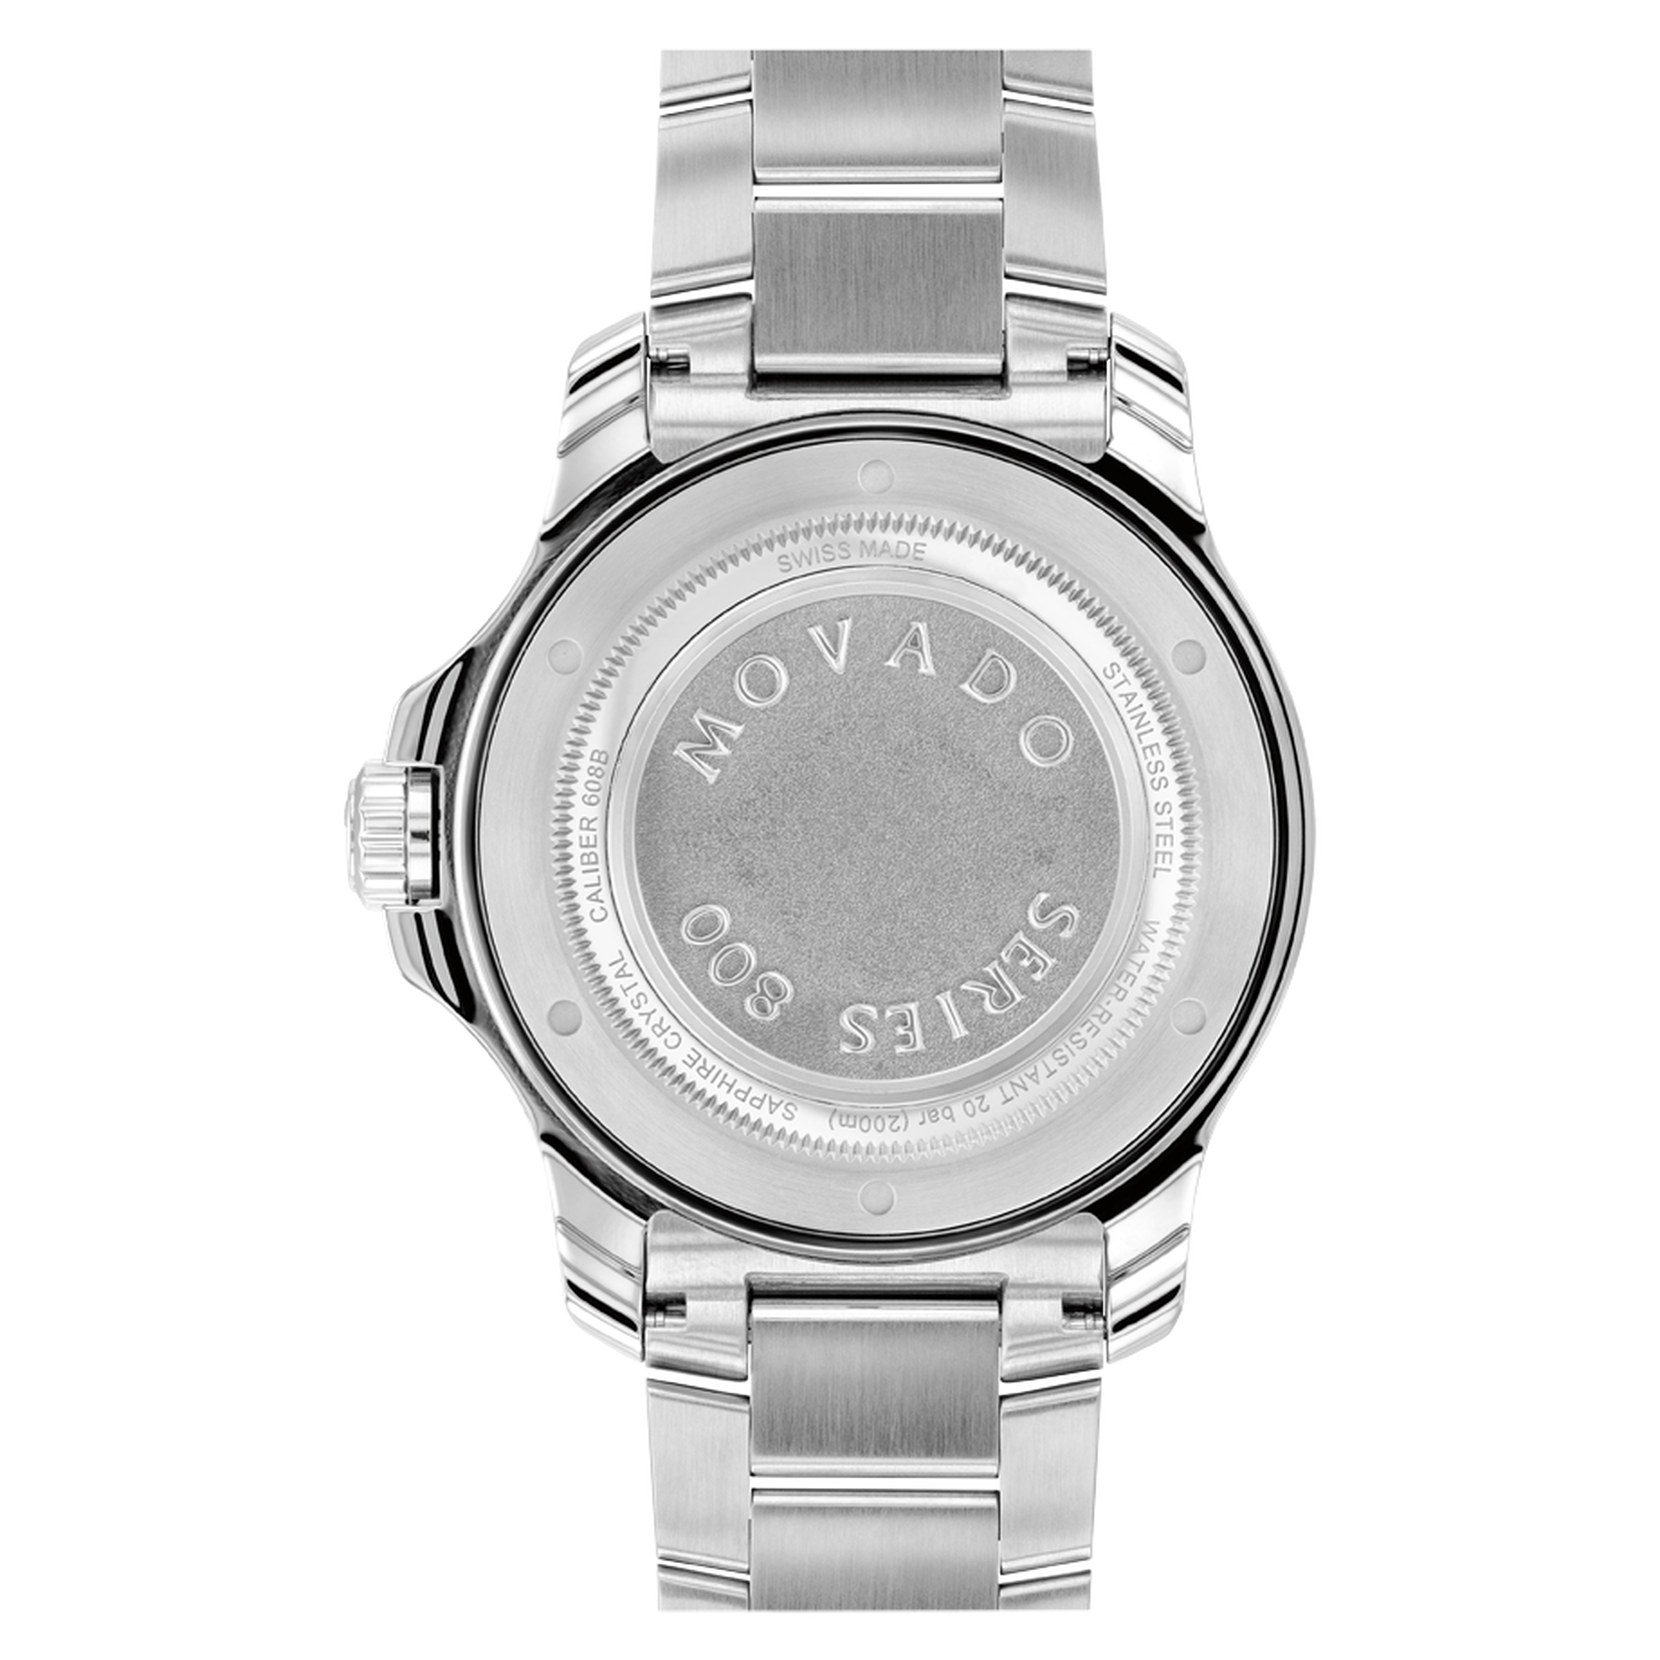 Men's Series 800 Automatic Watch 2600157 Movado